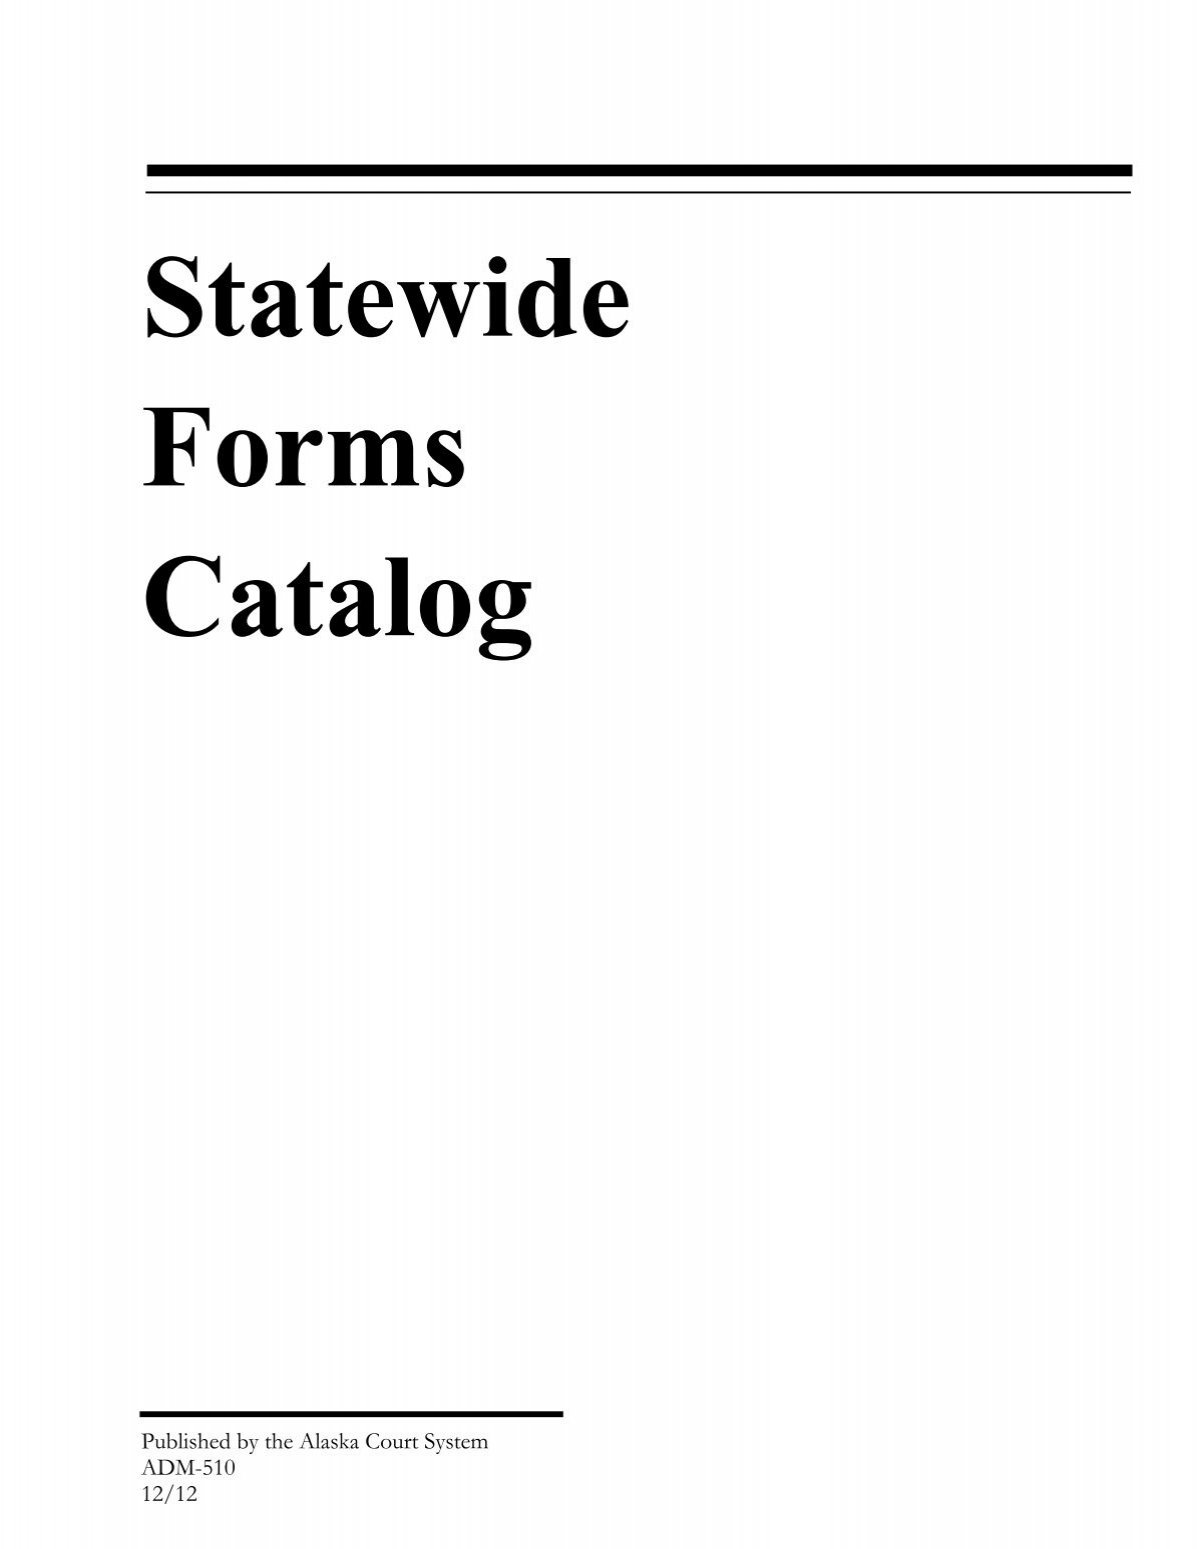 alaska-court-system-statewide-forms-catalog-9-11